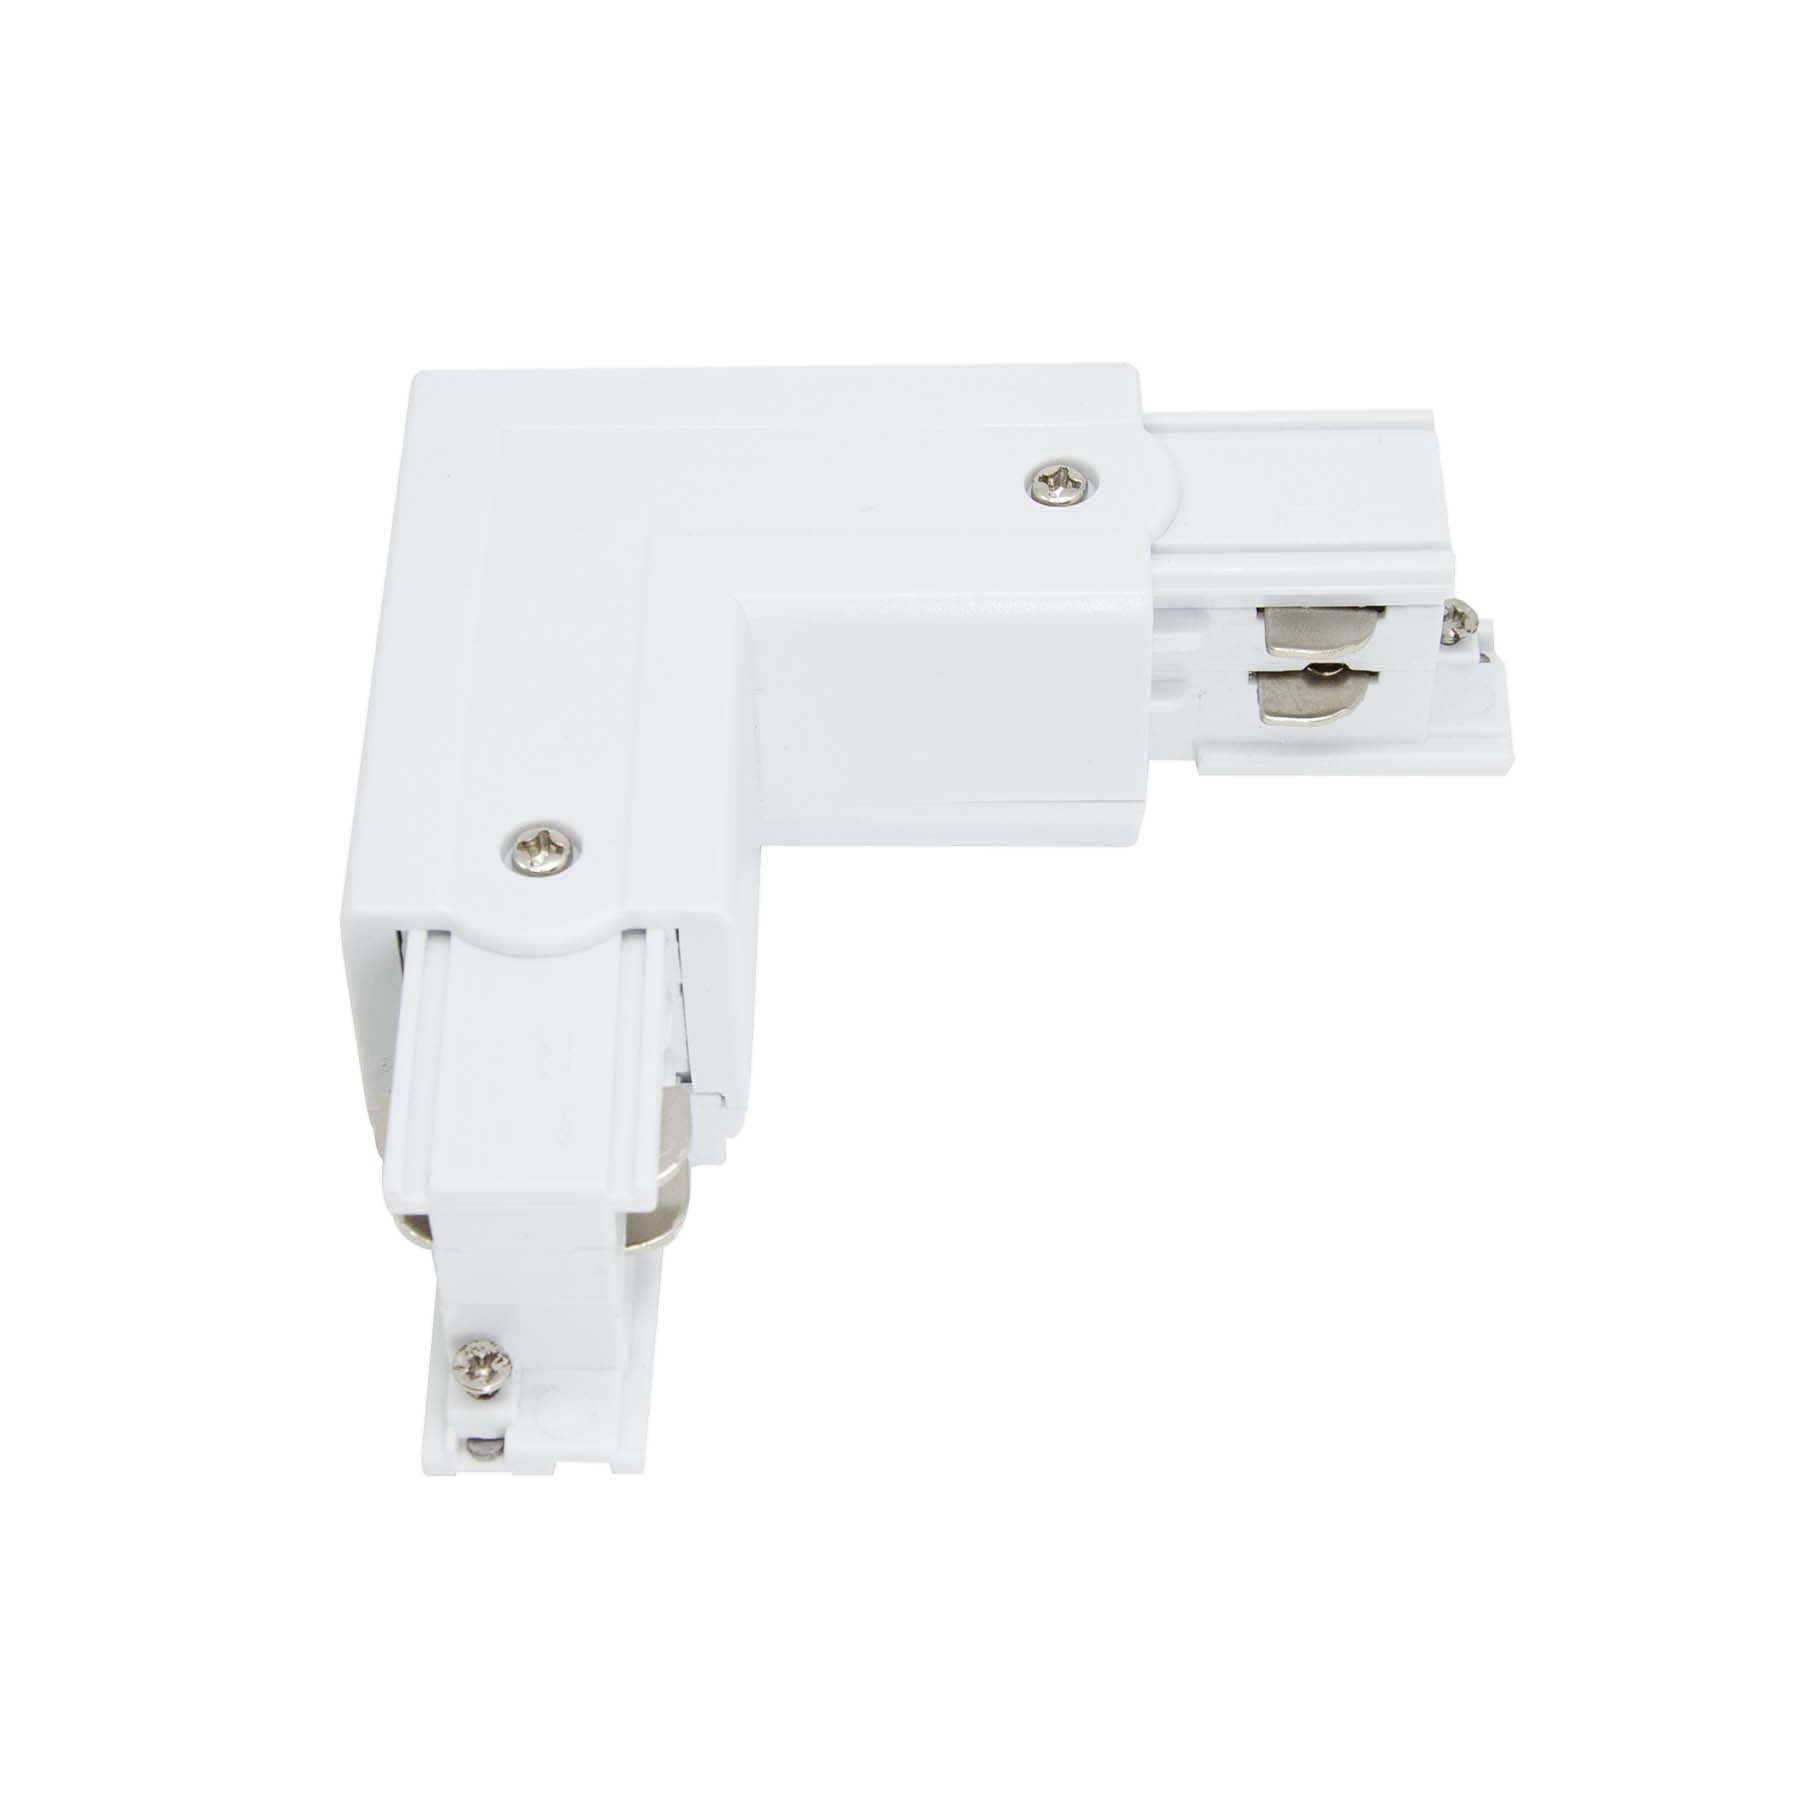 G.W.S LED Wholesale Ltd. 3 Circuits / White L Shape Connector For LED Track Light